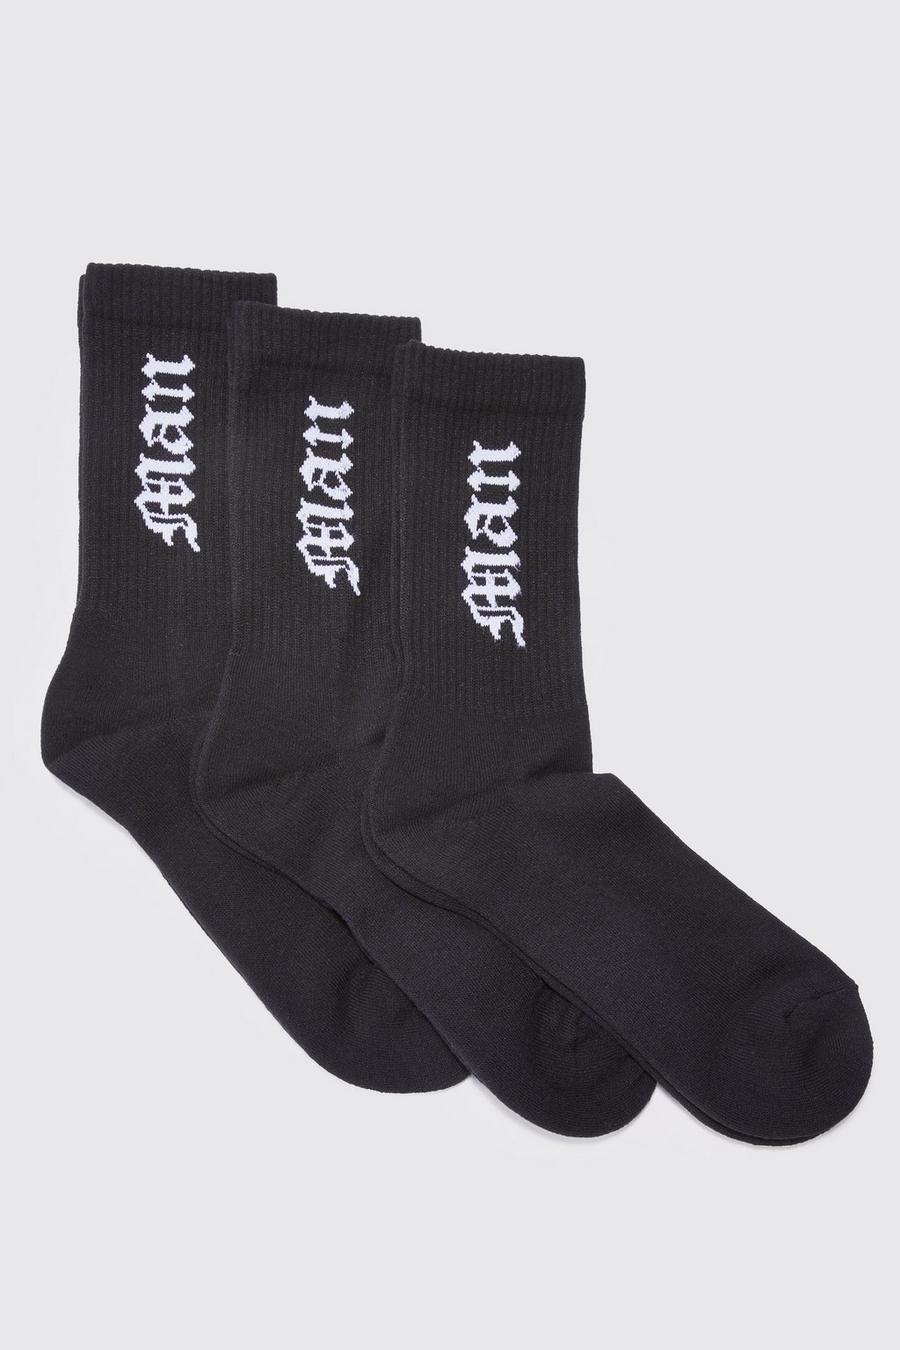 Black 3 Pack Gothic Man Sports Socks